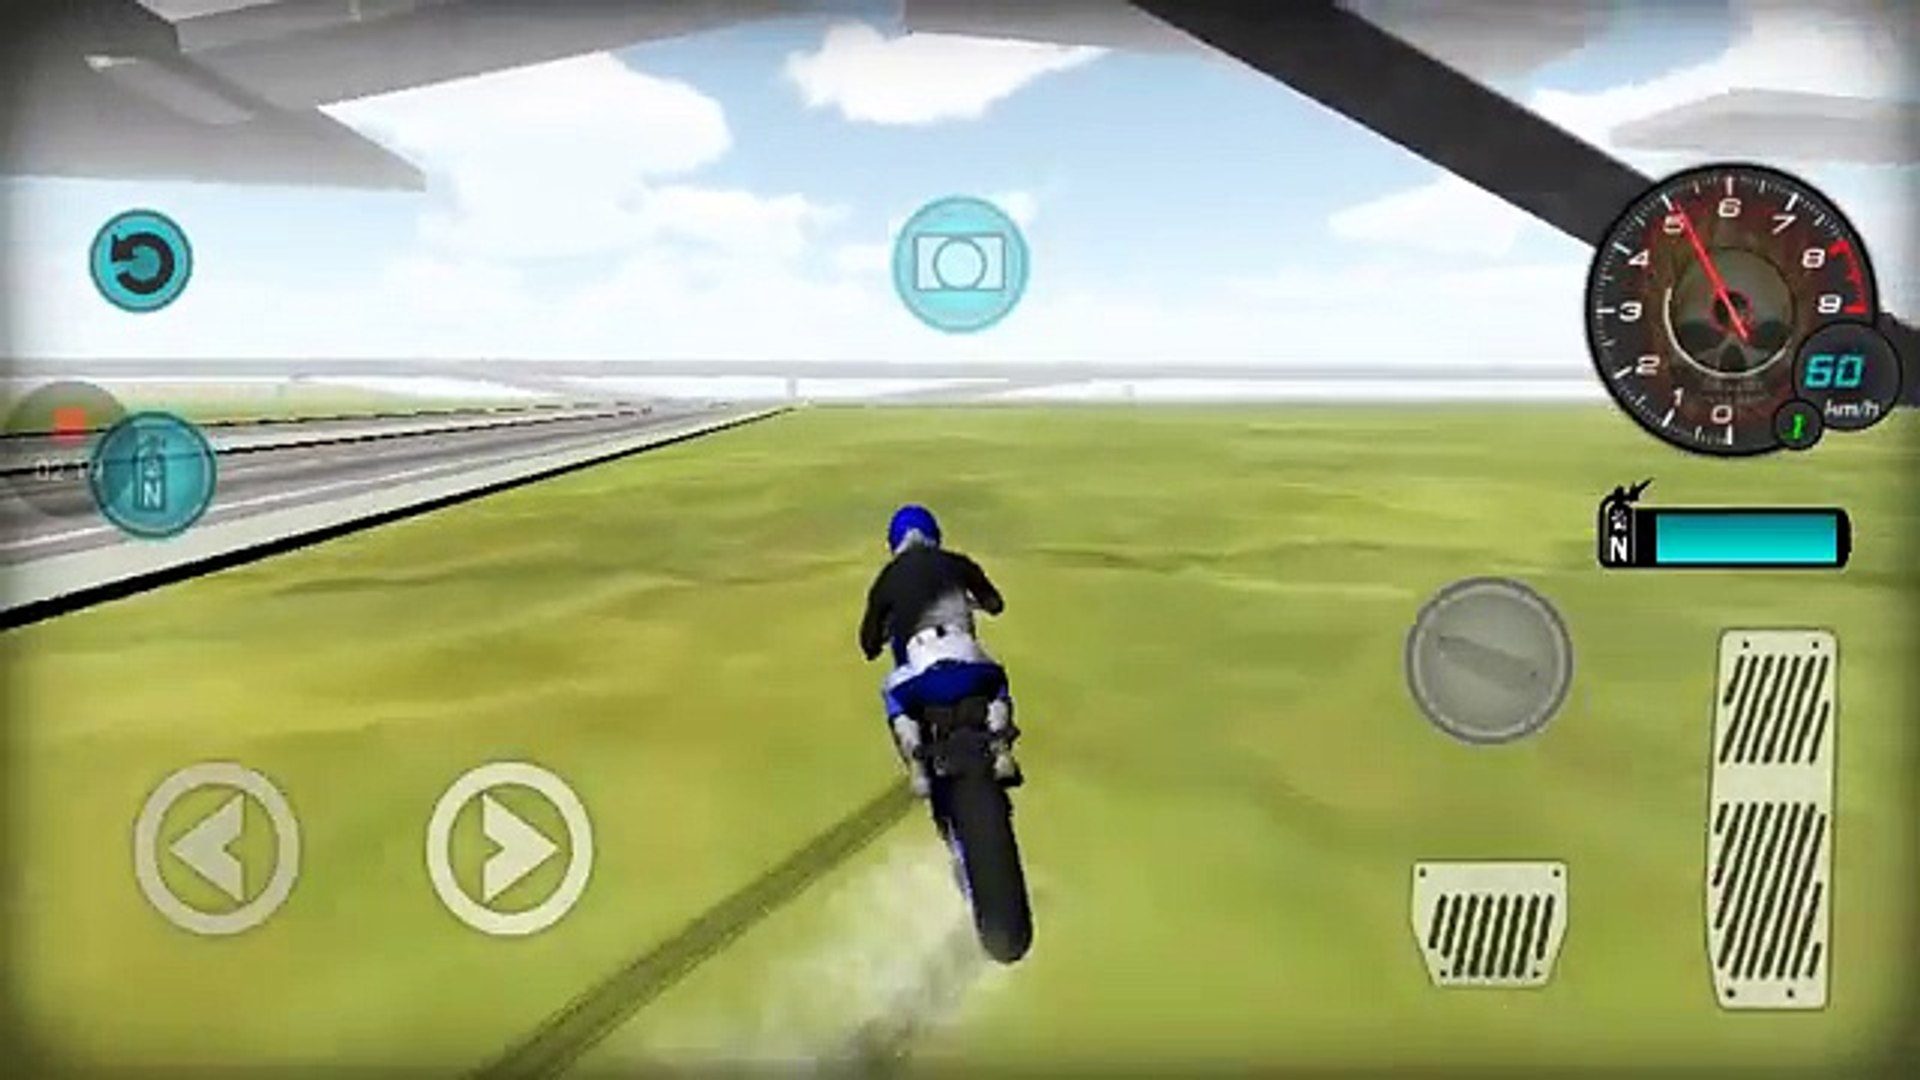 EXTREME BIKE RACING GAME #Dirt MotorCycle Race Game #Bike Games 3D